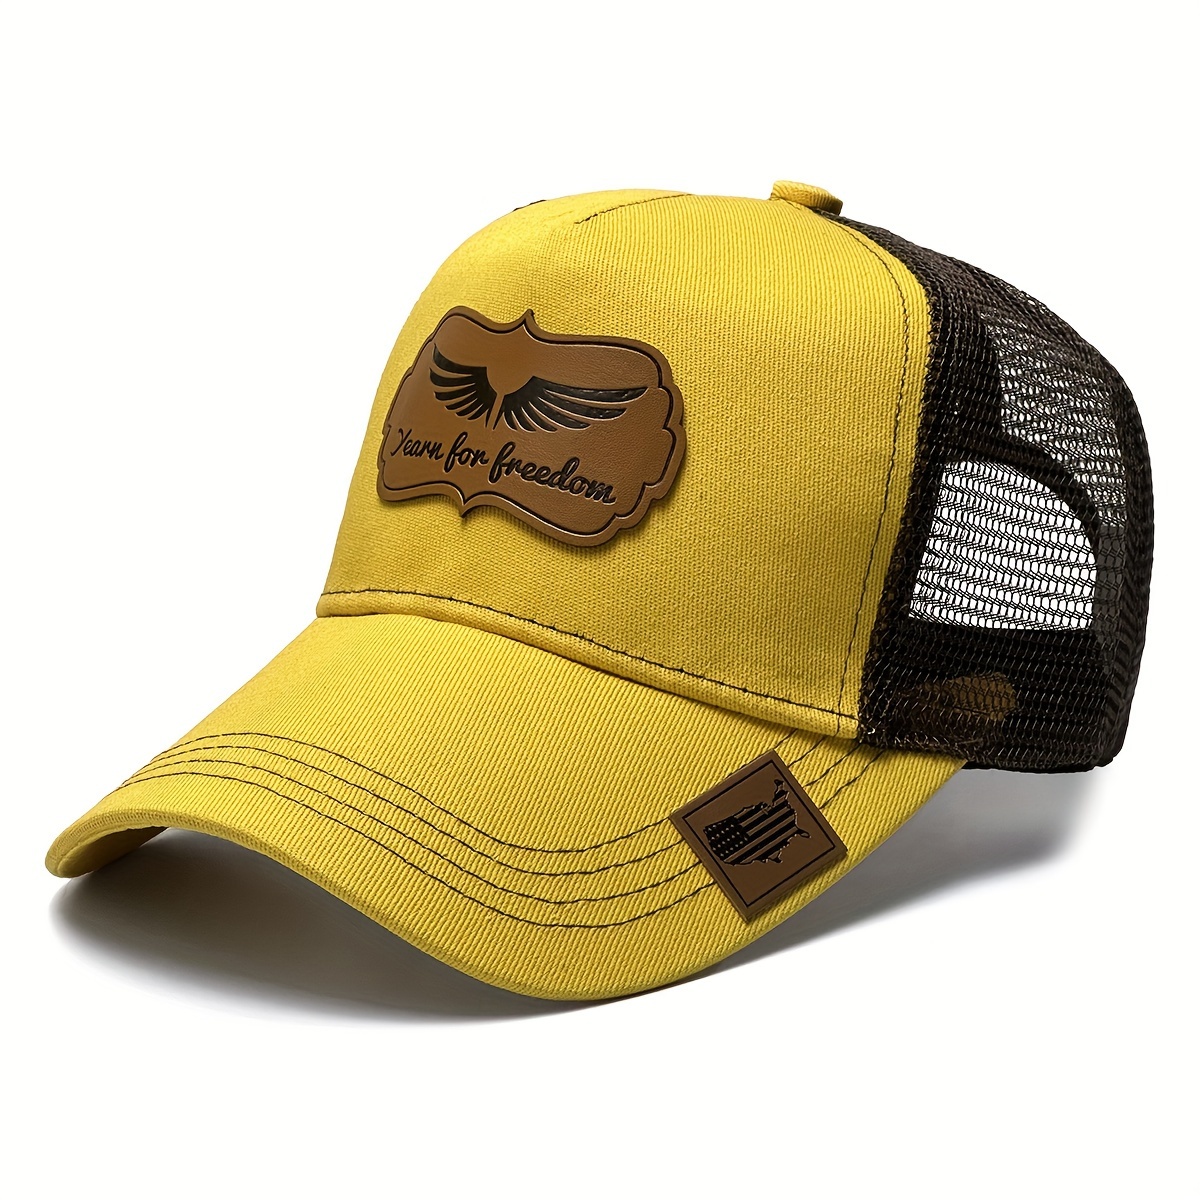 Angel Wings Trucker Hat, Baseball with Mesh Back, Outdoor Apparel, Fishing Hat, Bucket Hat, Sun Hat, Sun Protection, Adjustable Snapback, unisex